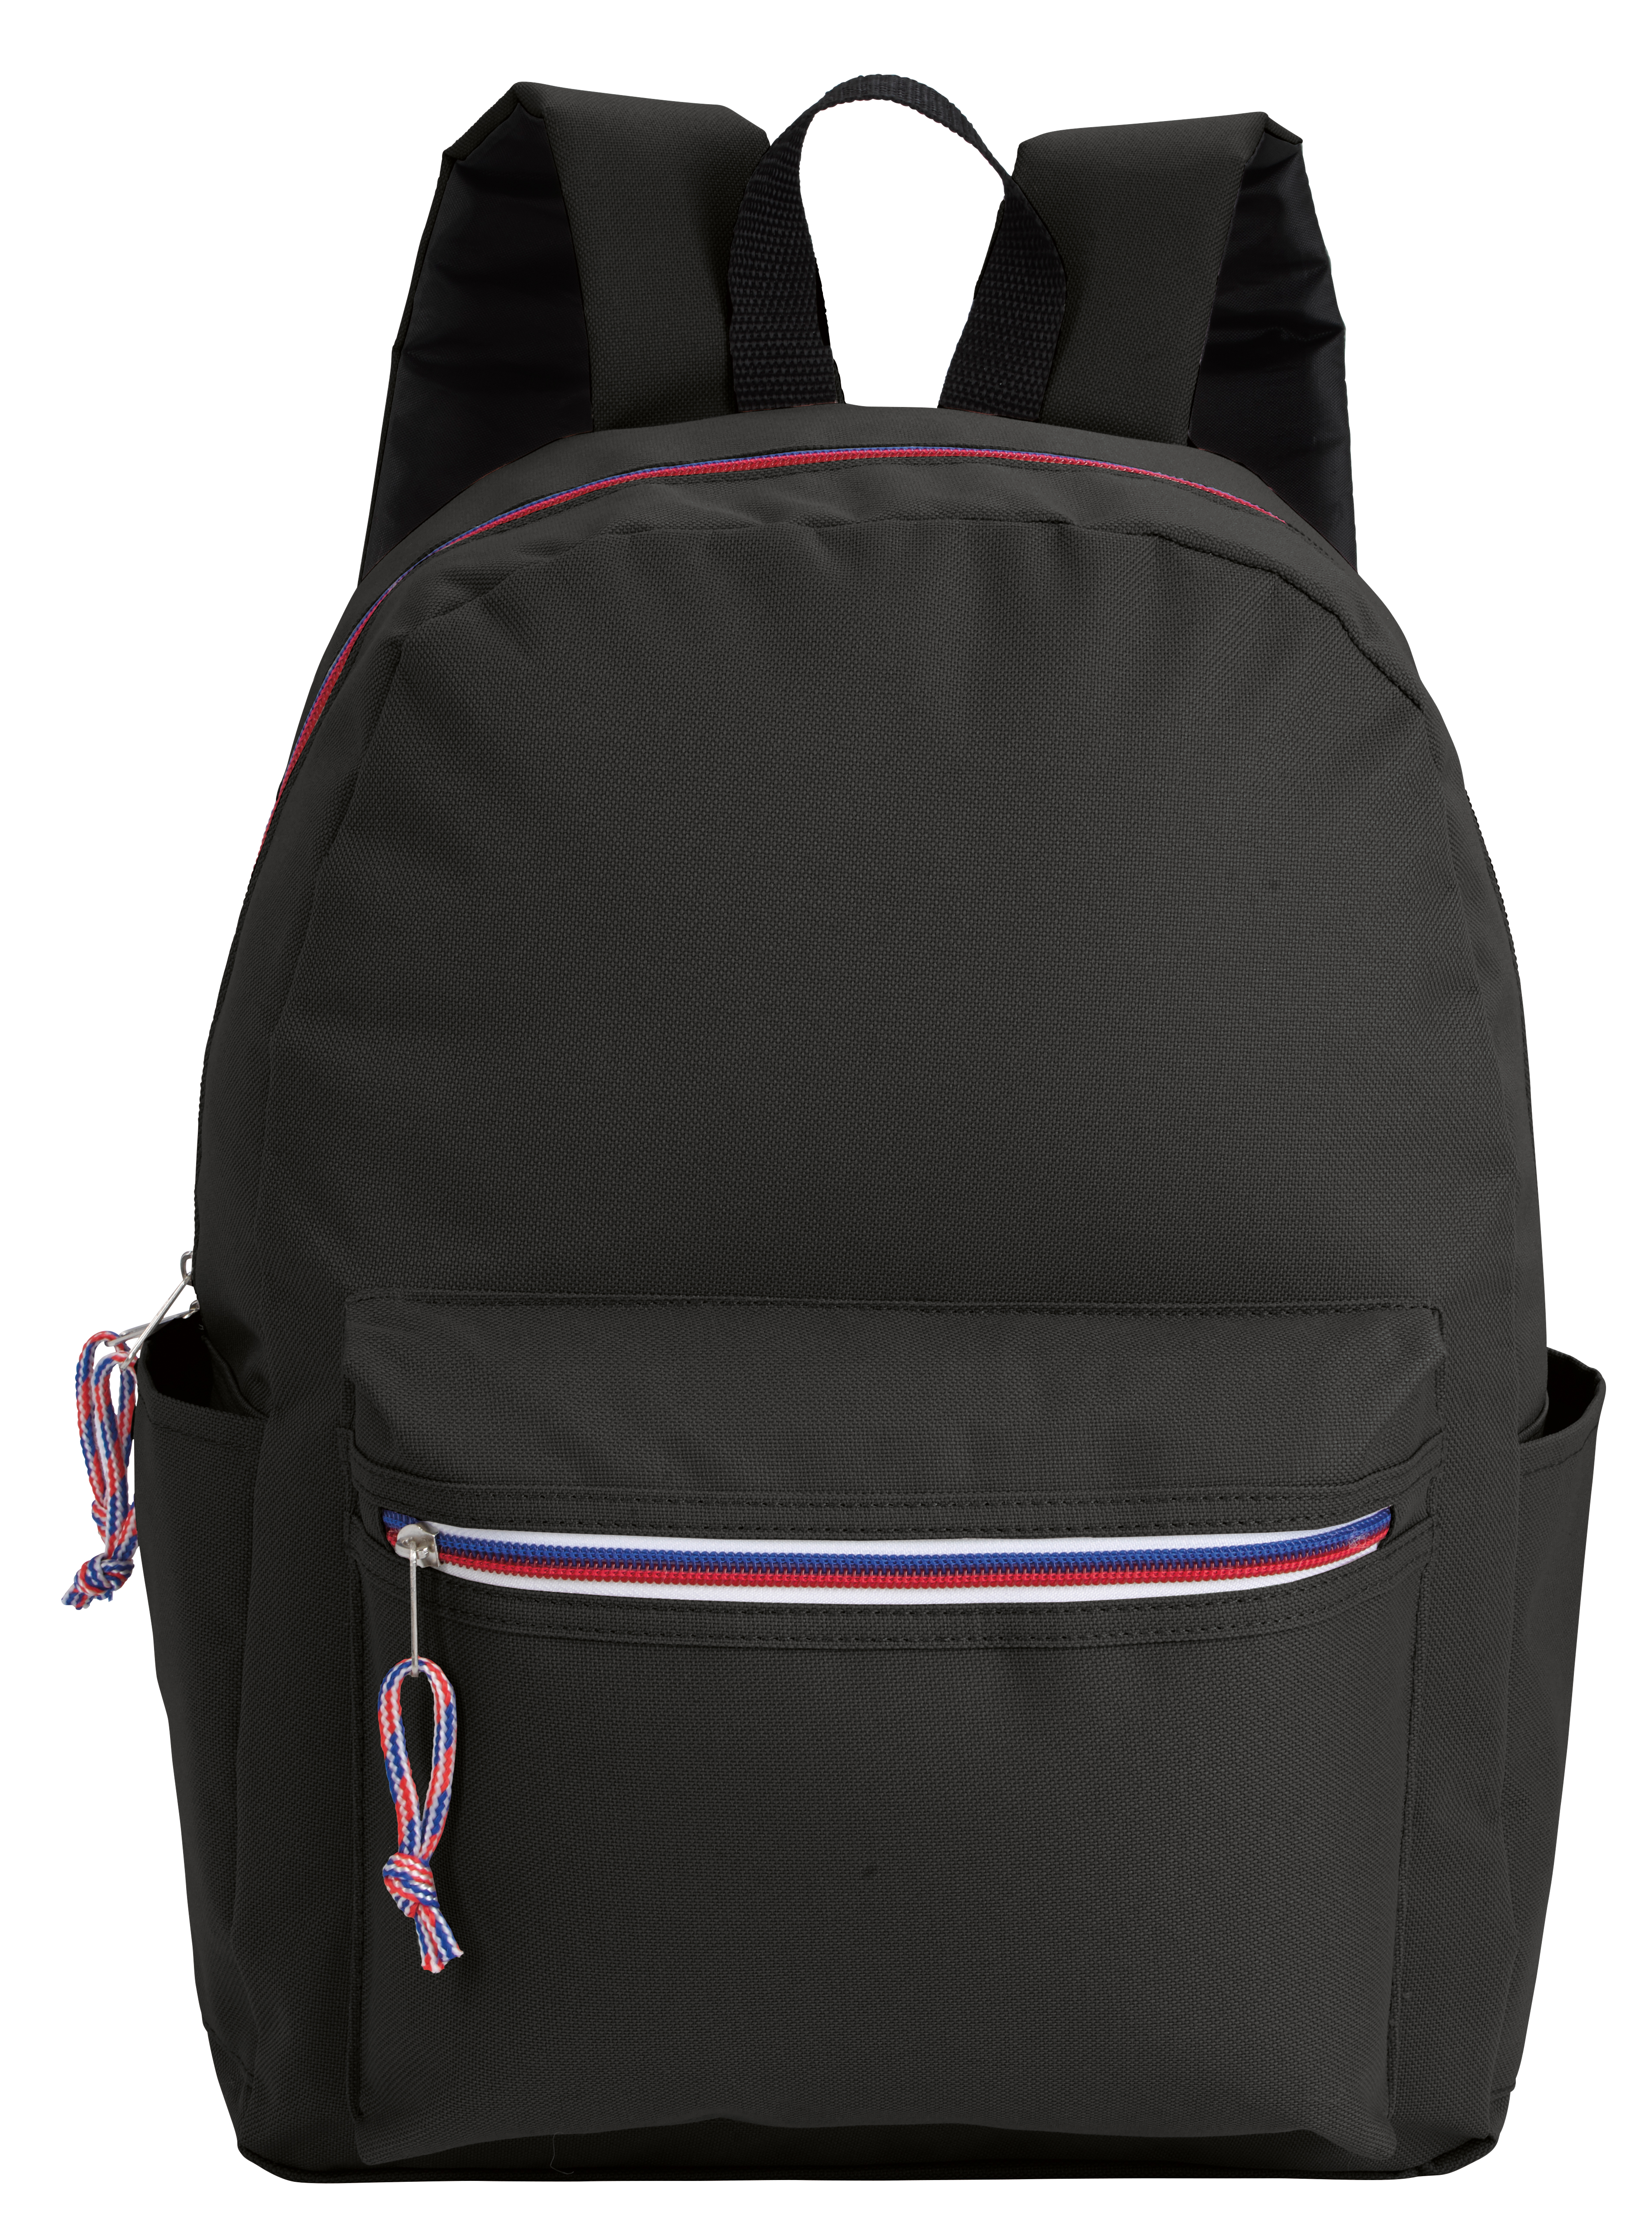 Good Value 16156 - Tri-Color Zipper Backpack